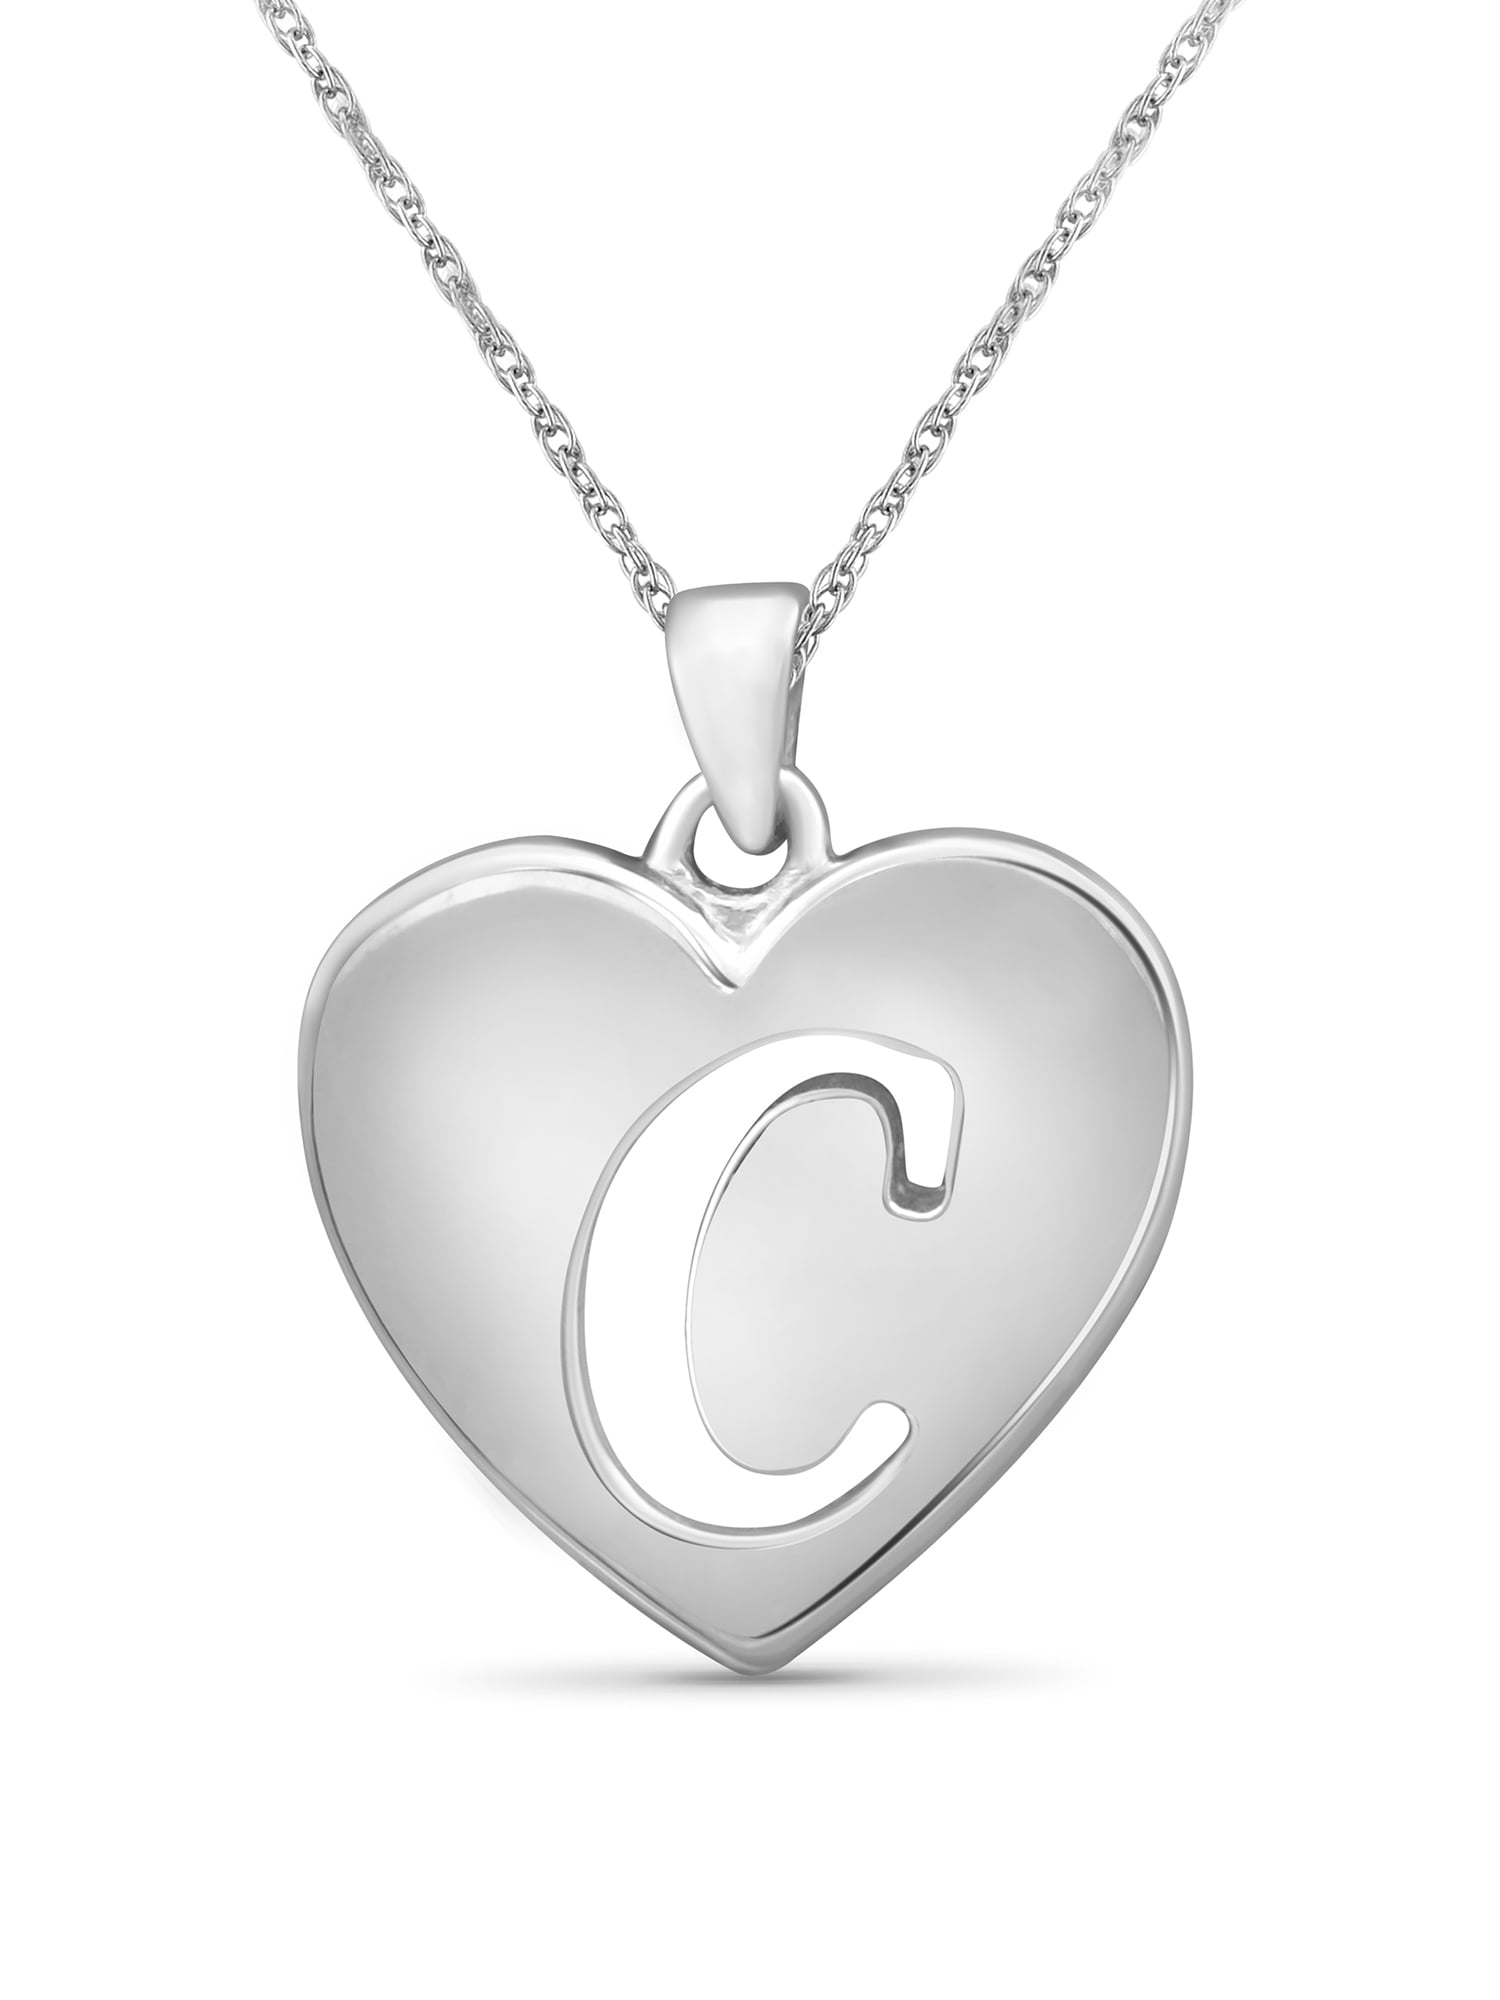 Silver Cz Initial Alphabet Letter A Necklace Pendant Chain – ZIVOM